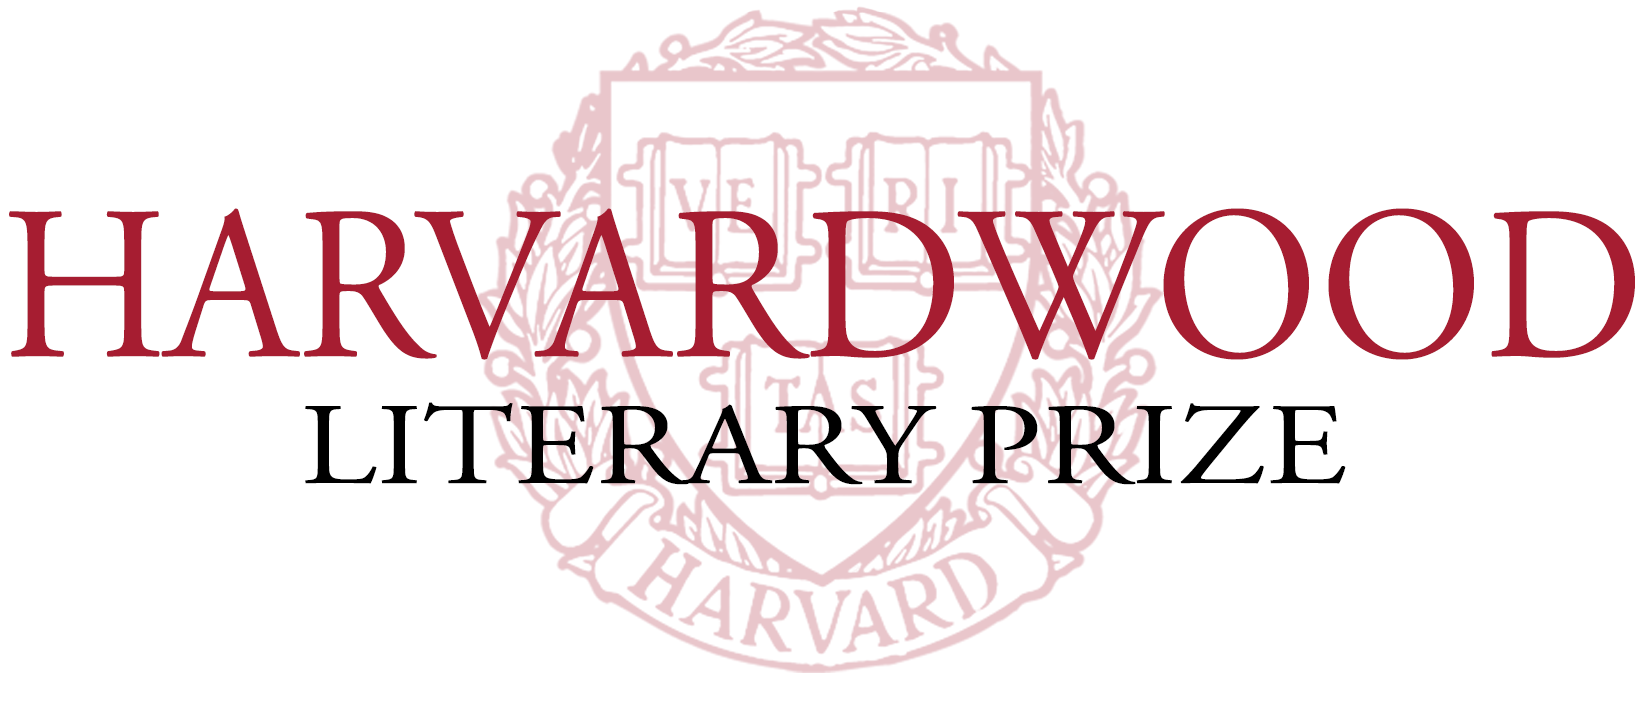 HARVARDWOOD LITERARY PRIZE